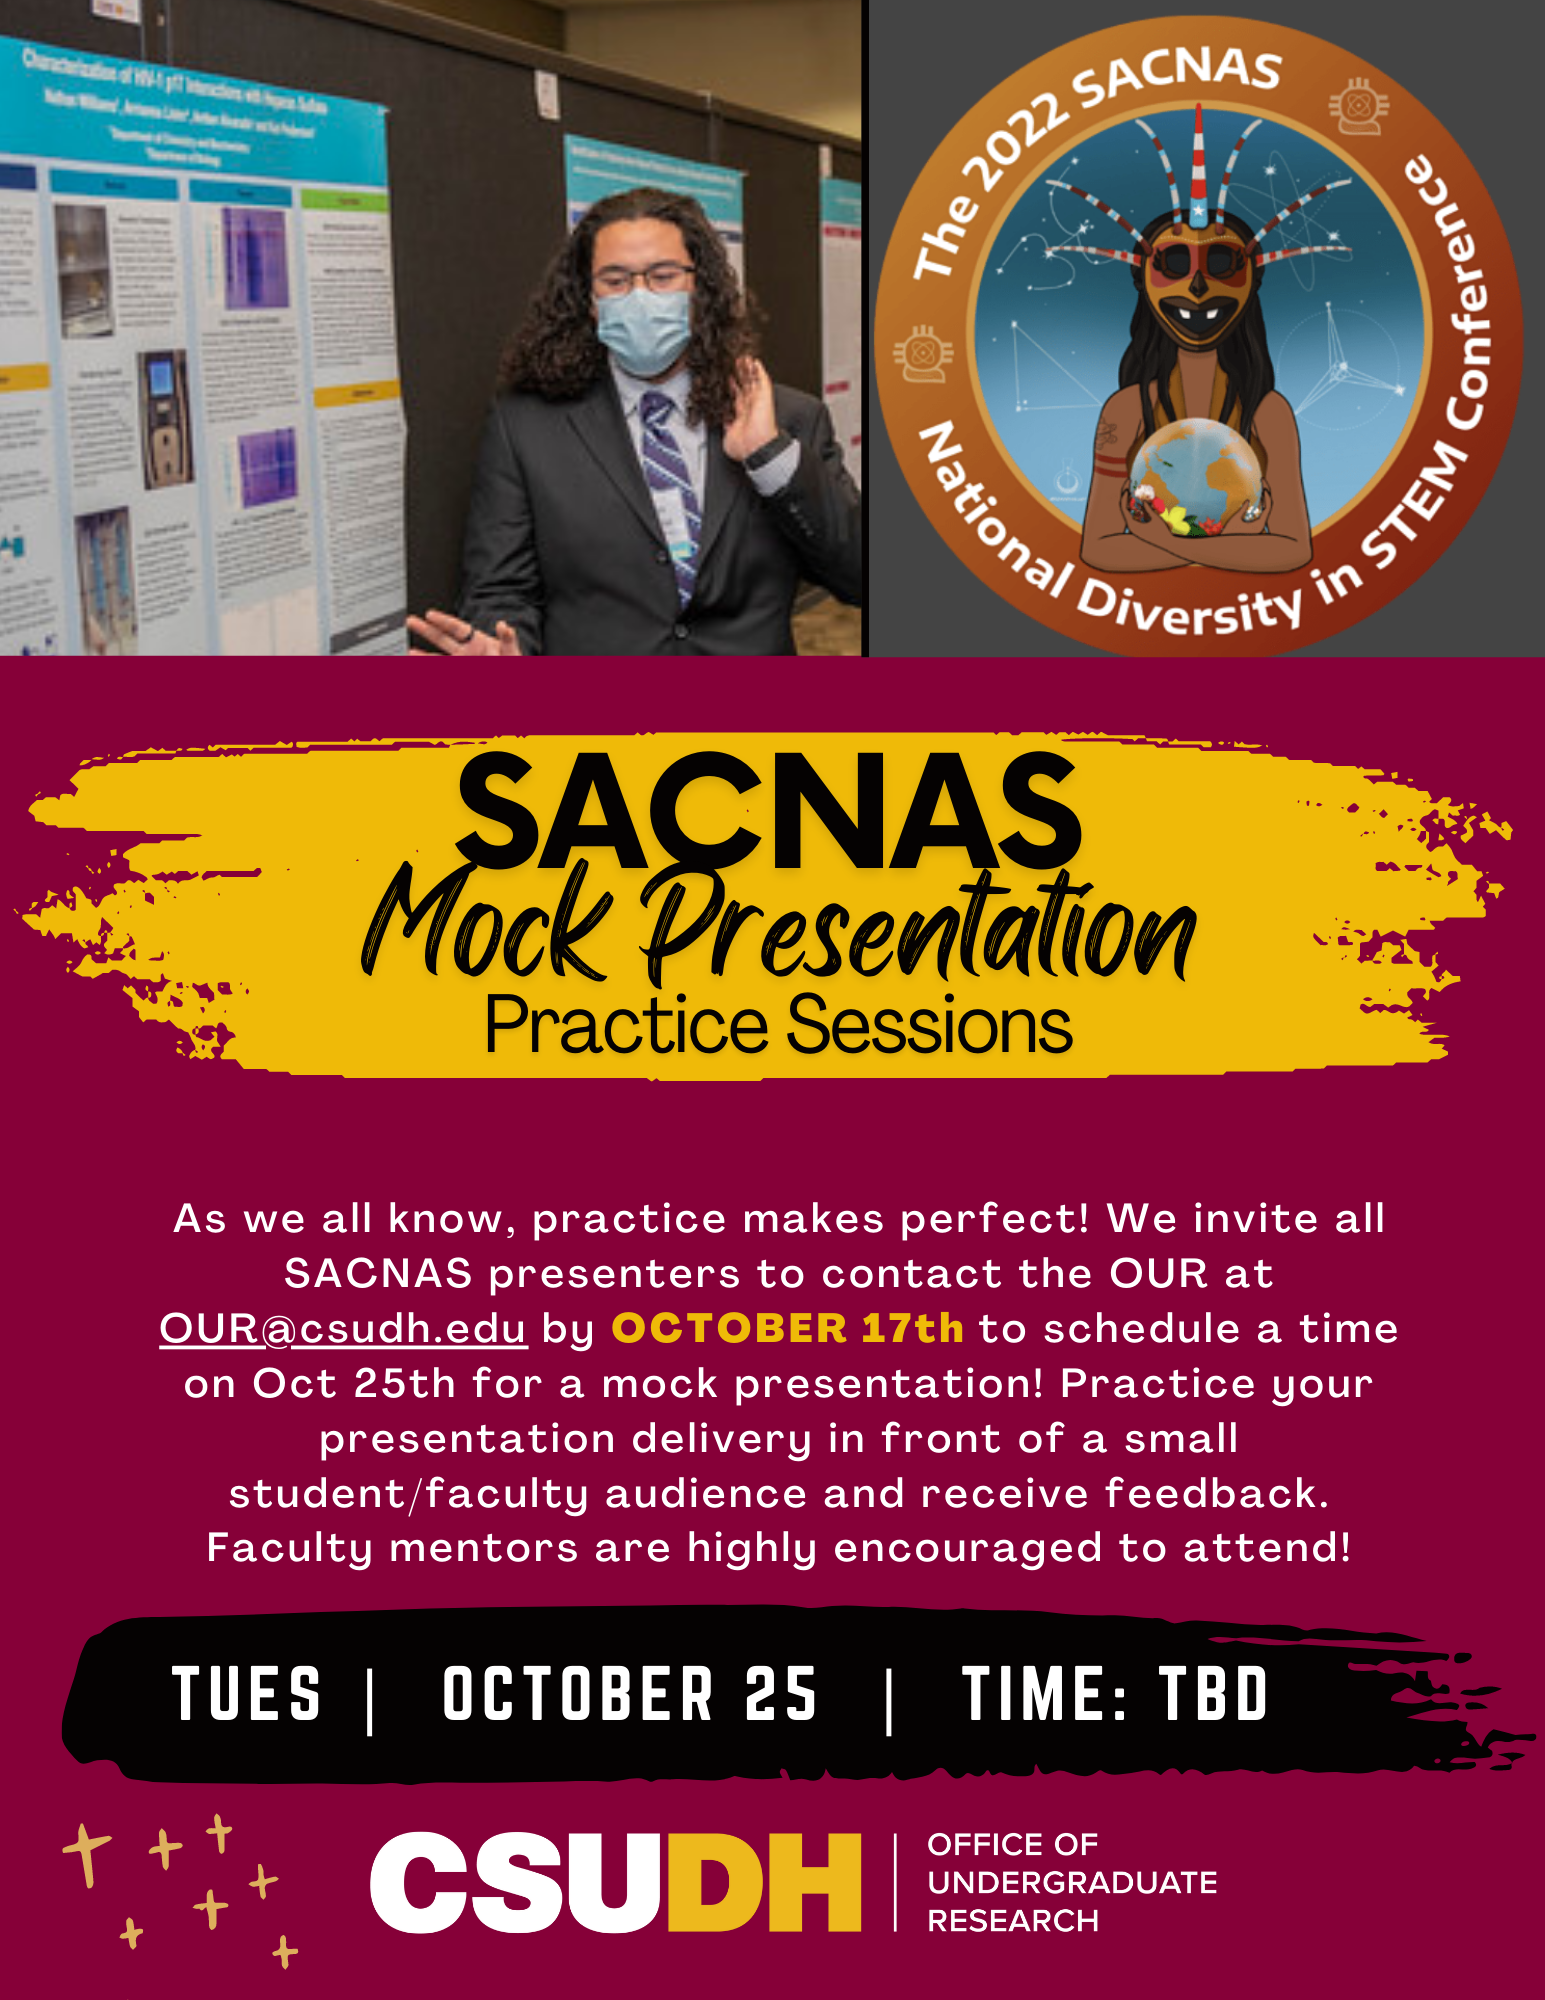 SACNAS-Mock-Presentation-Practice-Sessions-10-25-22.png